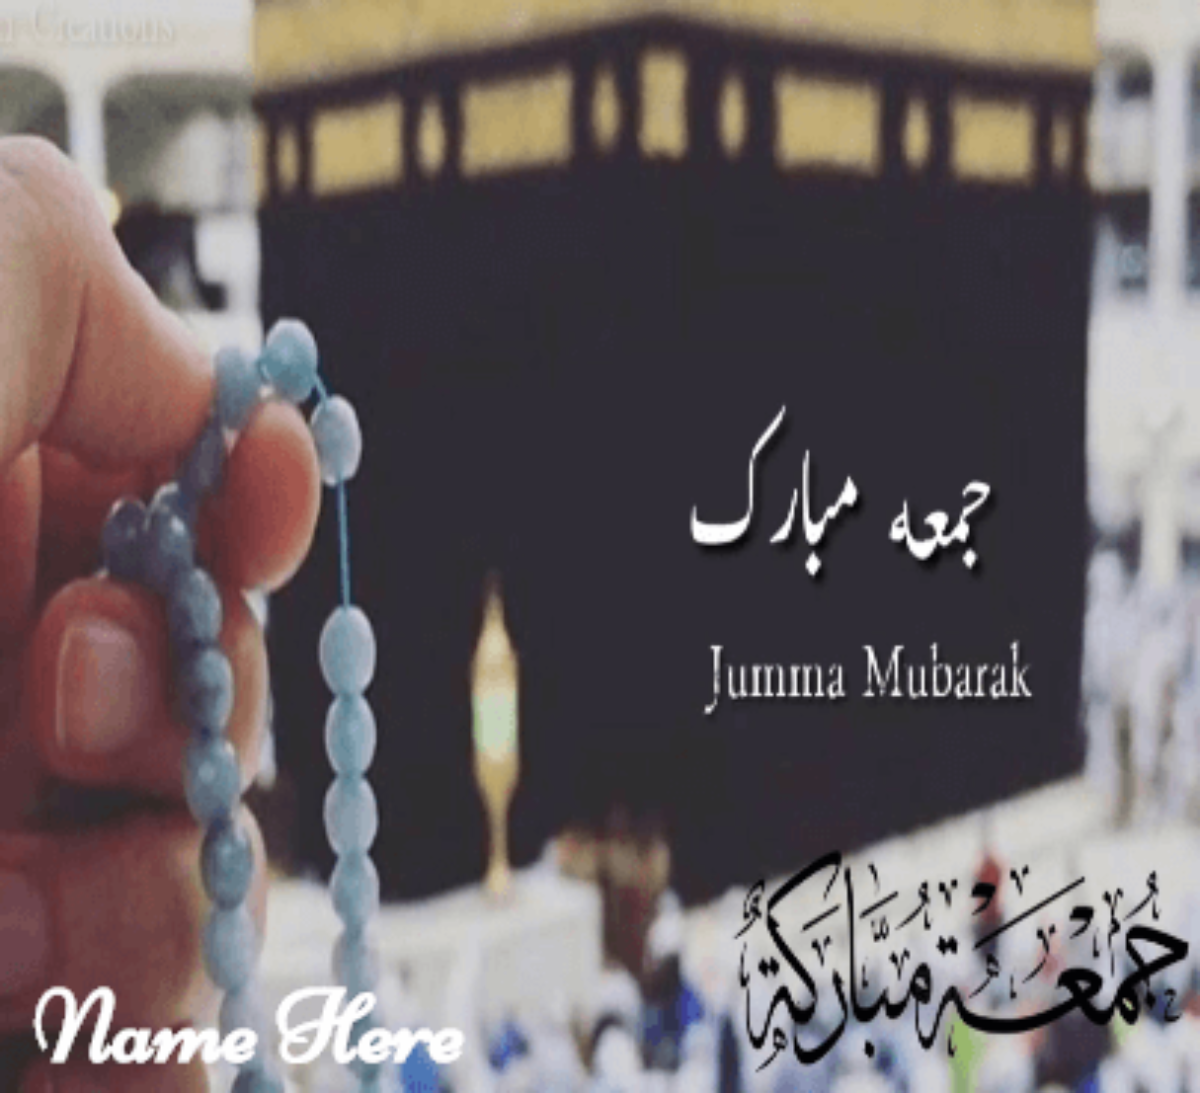 jumma Mubarak Pictures - Juma Mubarak Images With Name